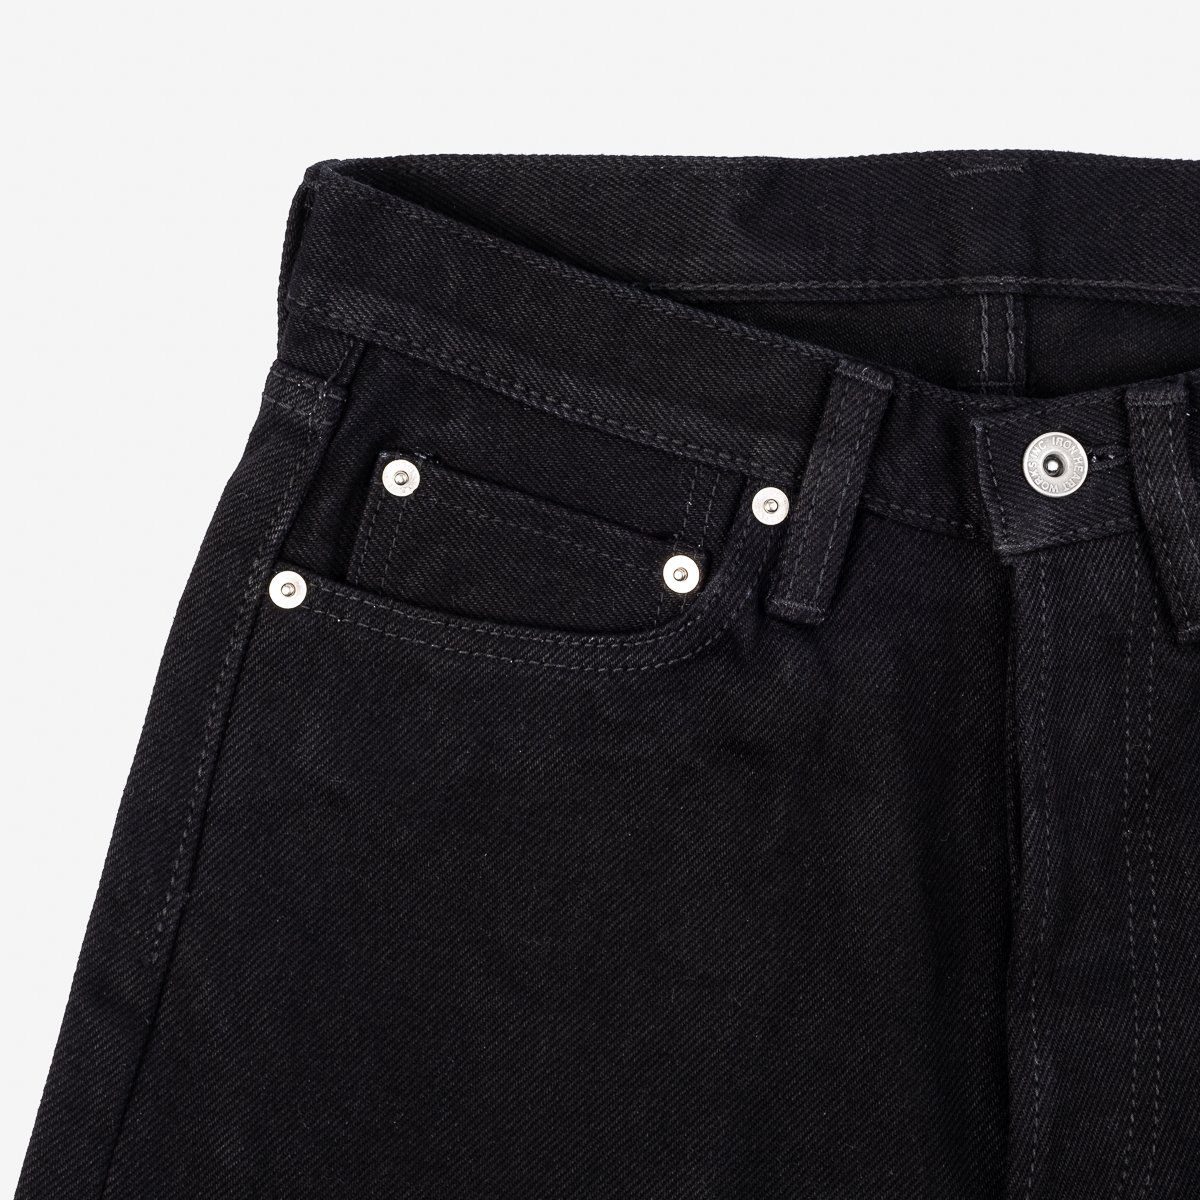 21oz Selvedge Denim Medium/High Rise Tapered Cut Jeans - Superblack ...